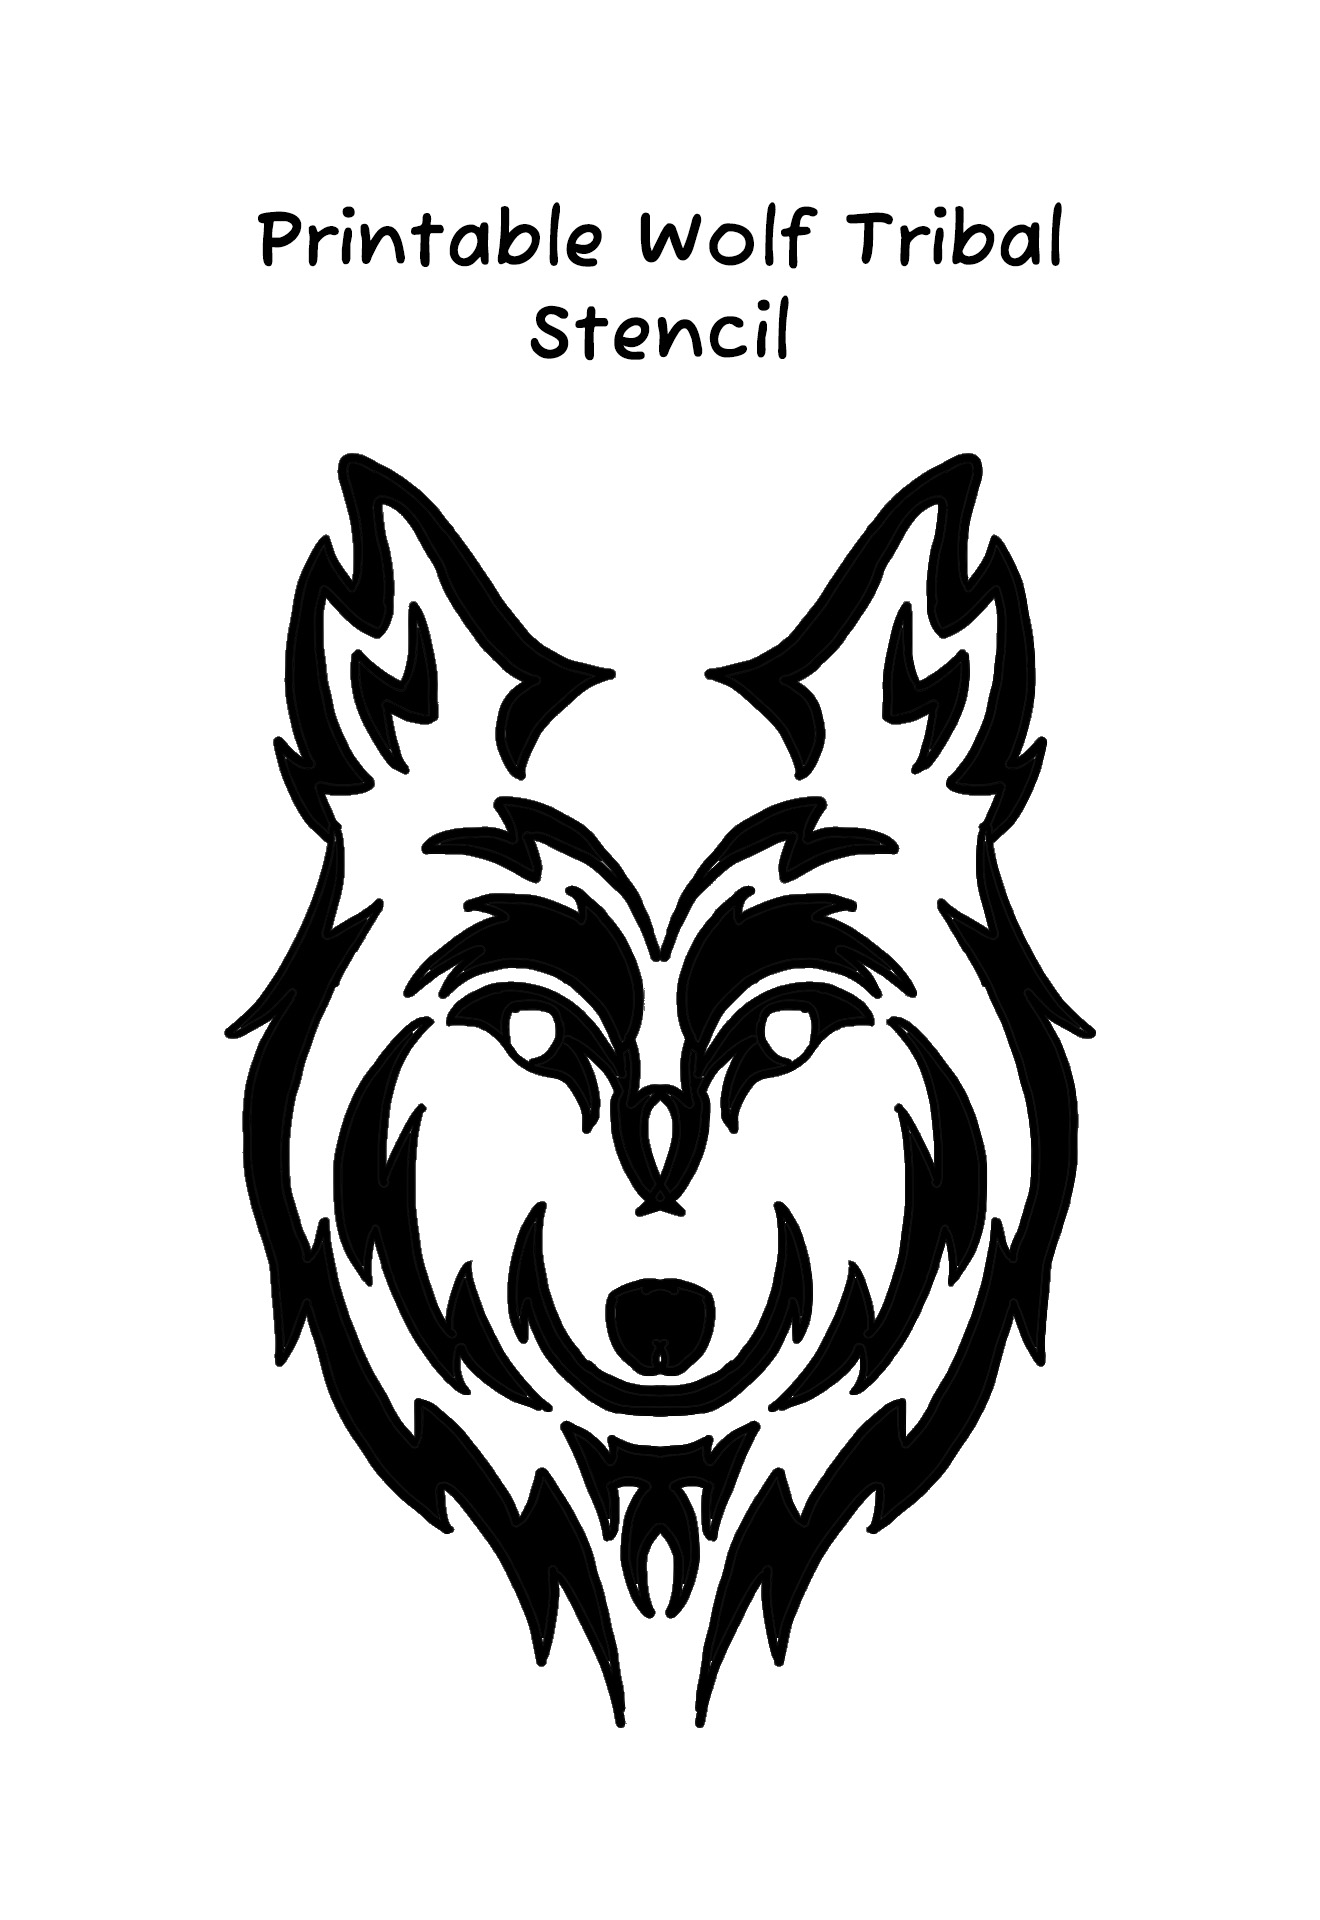 Printable Wolf Tribal Stencil